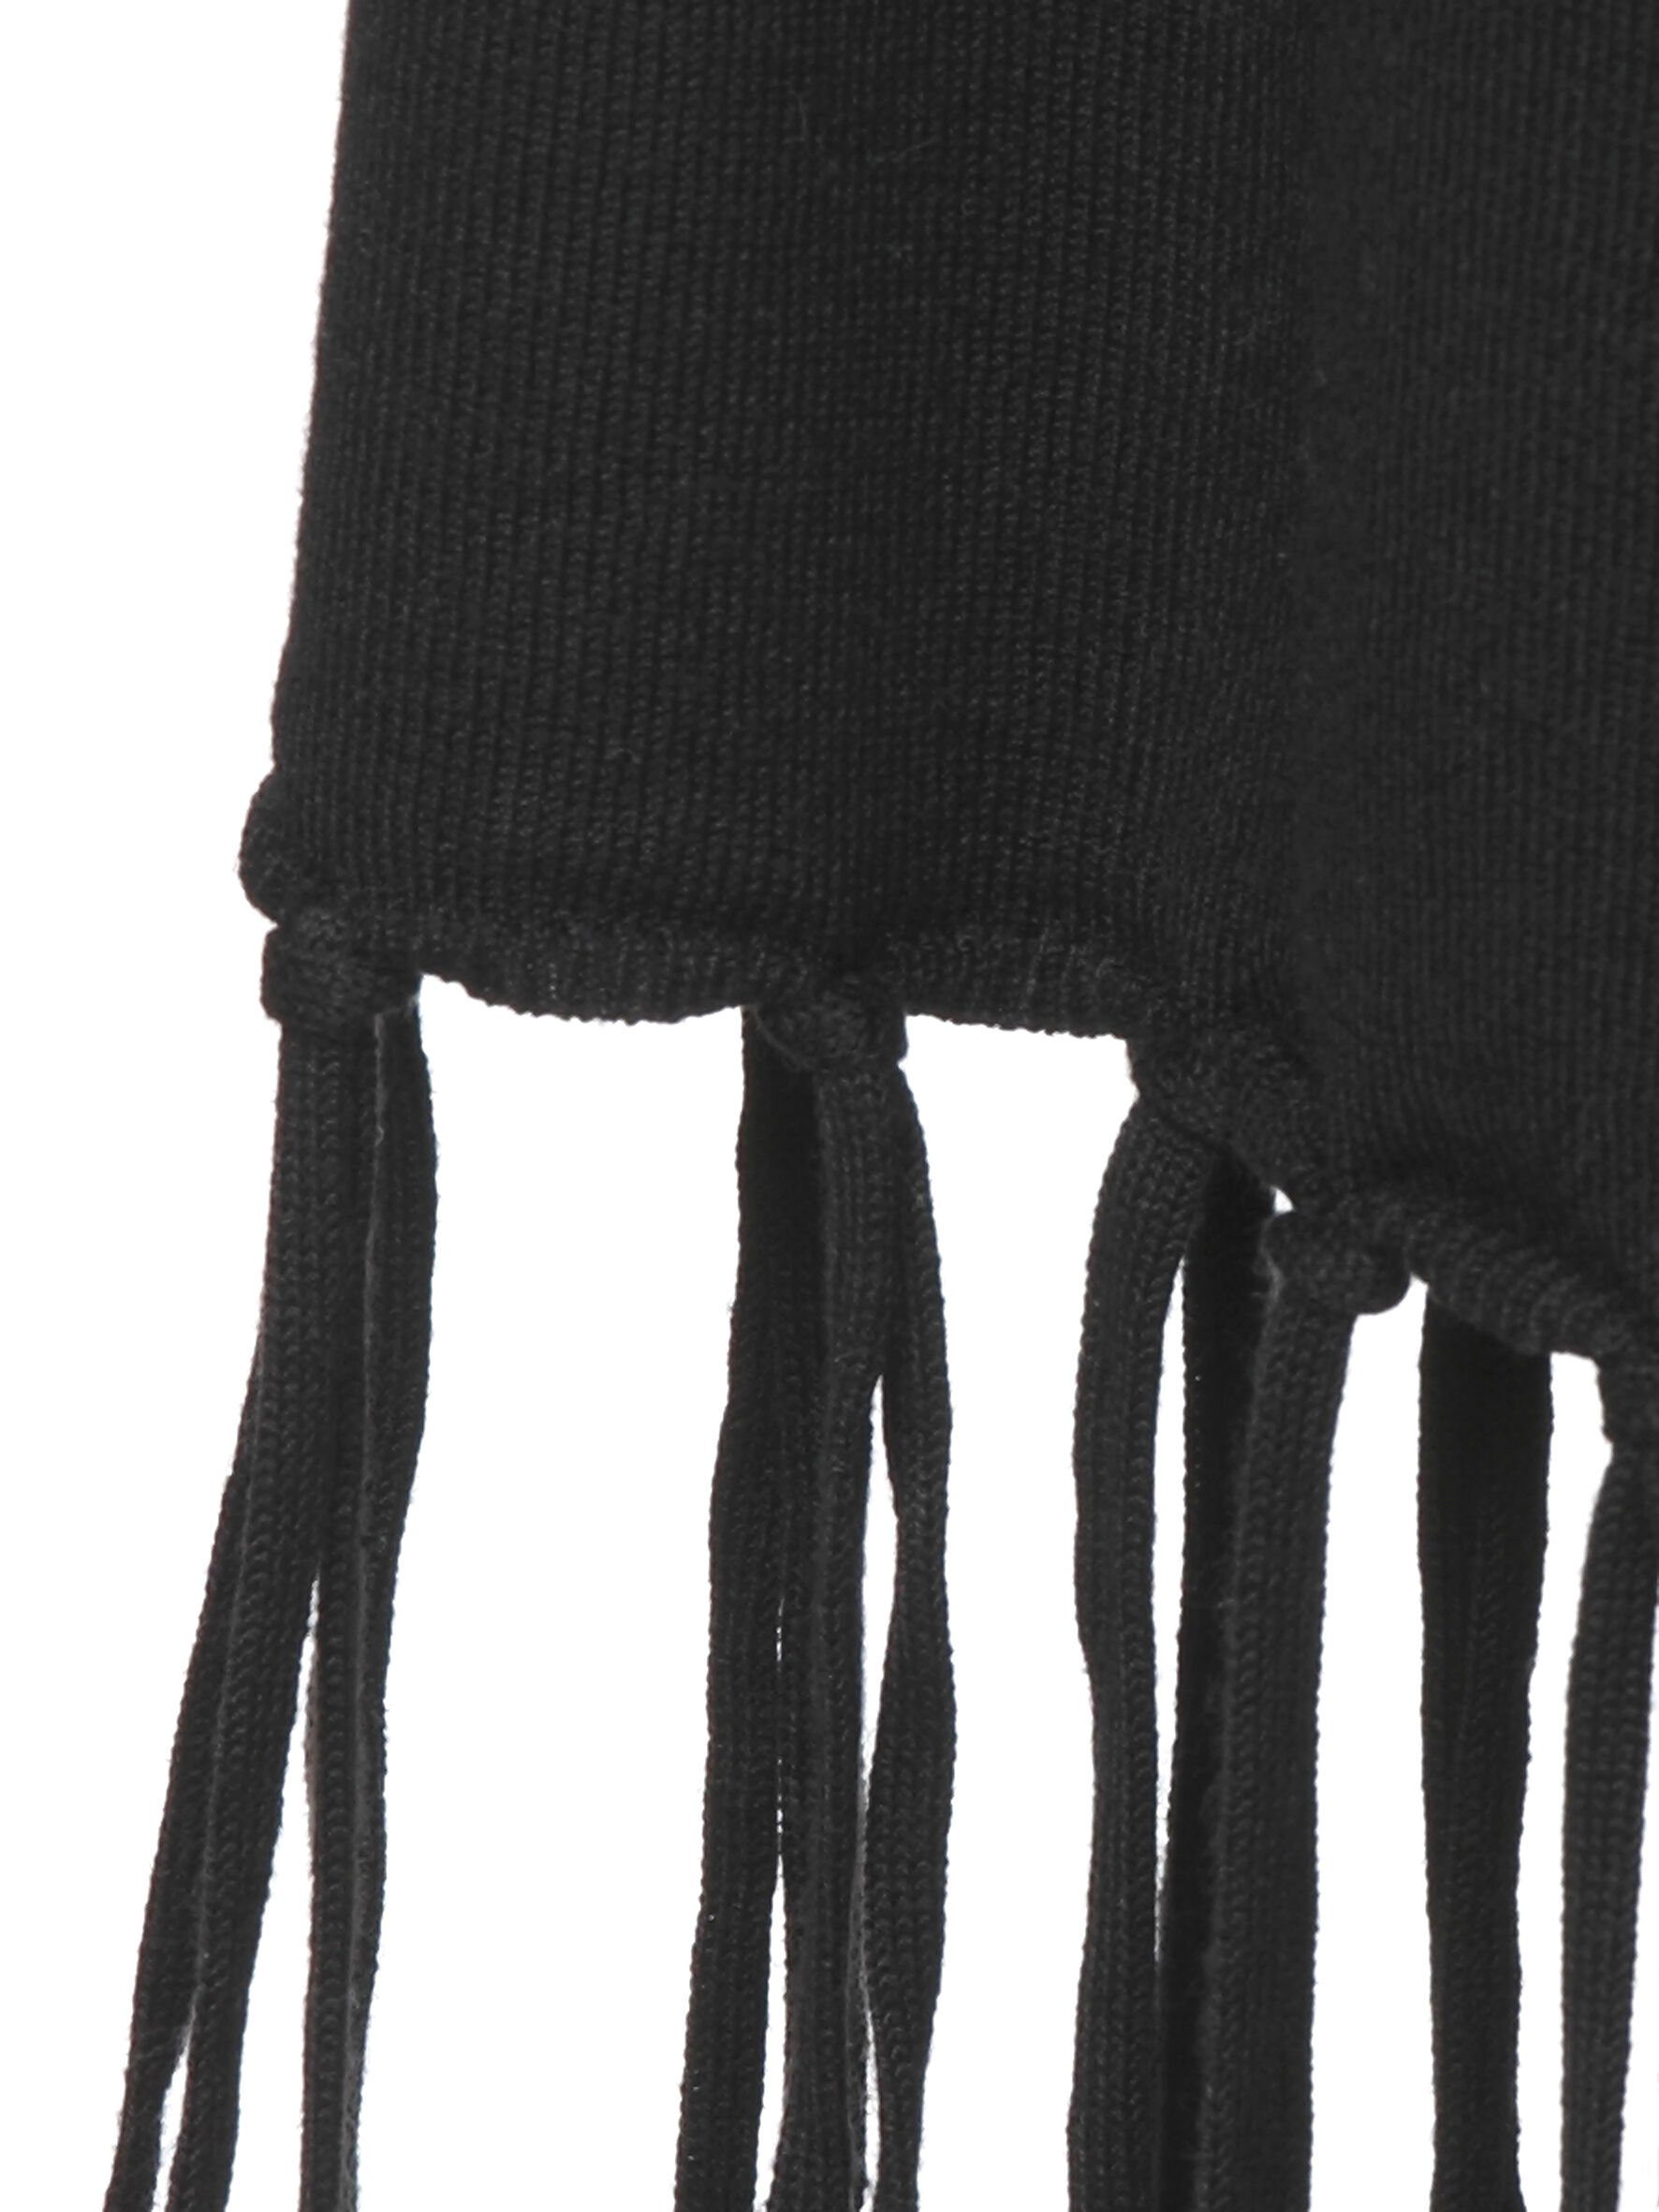 aus unifarbenem Stoff Unifarbener VIA DUE Rustikale APPIA schwarz Strickjacke mit Strickjacke Stil